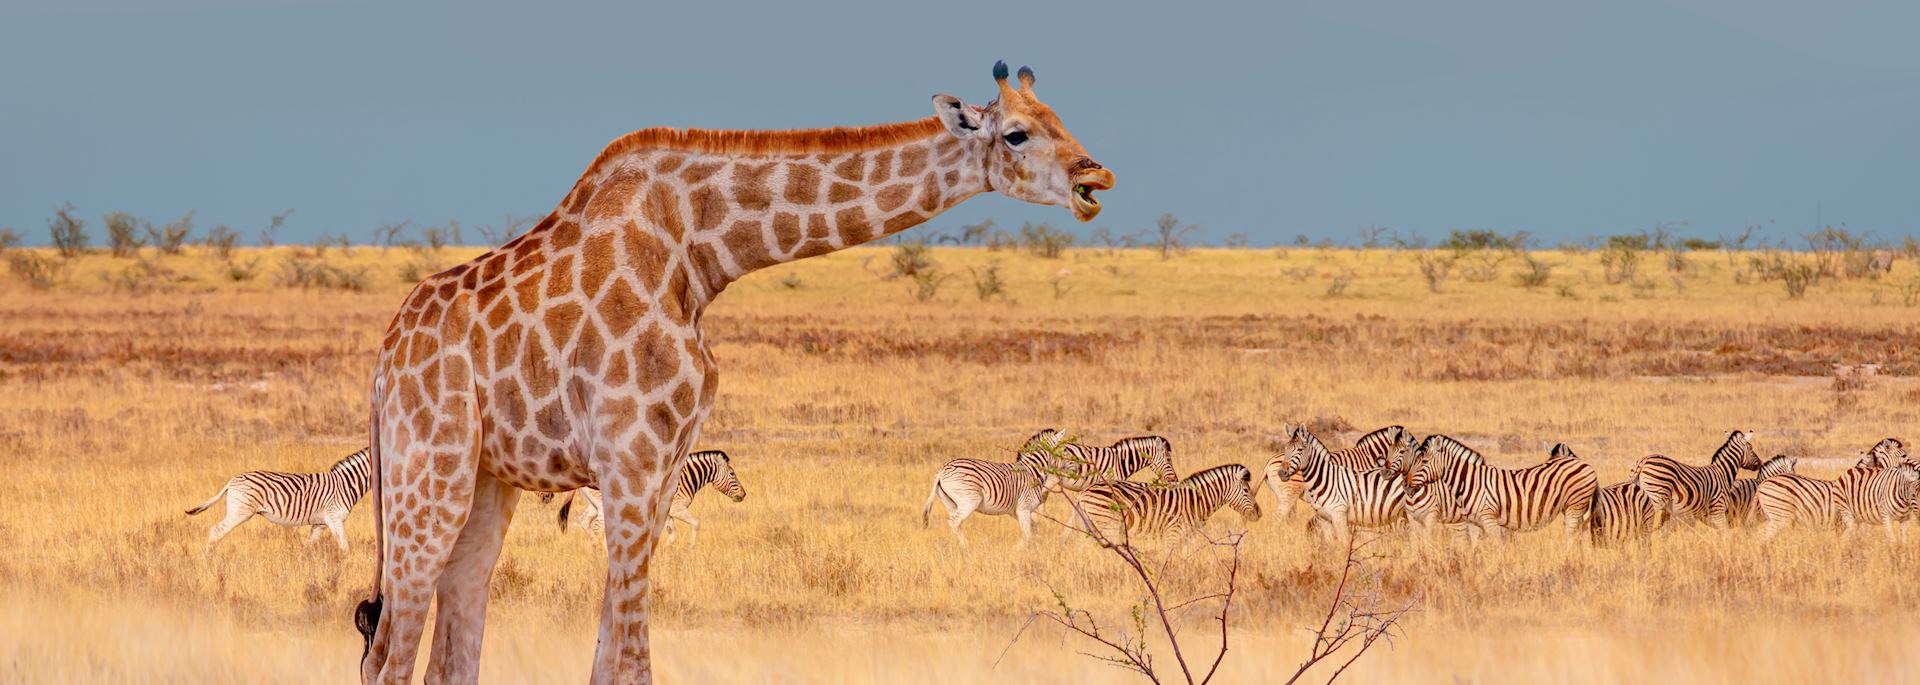 Giraffe and zebra in Etosha